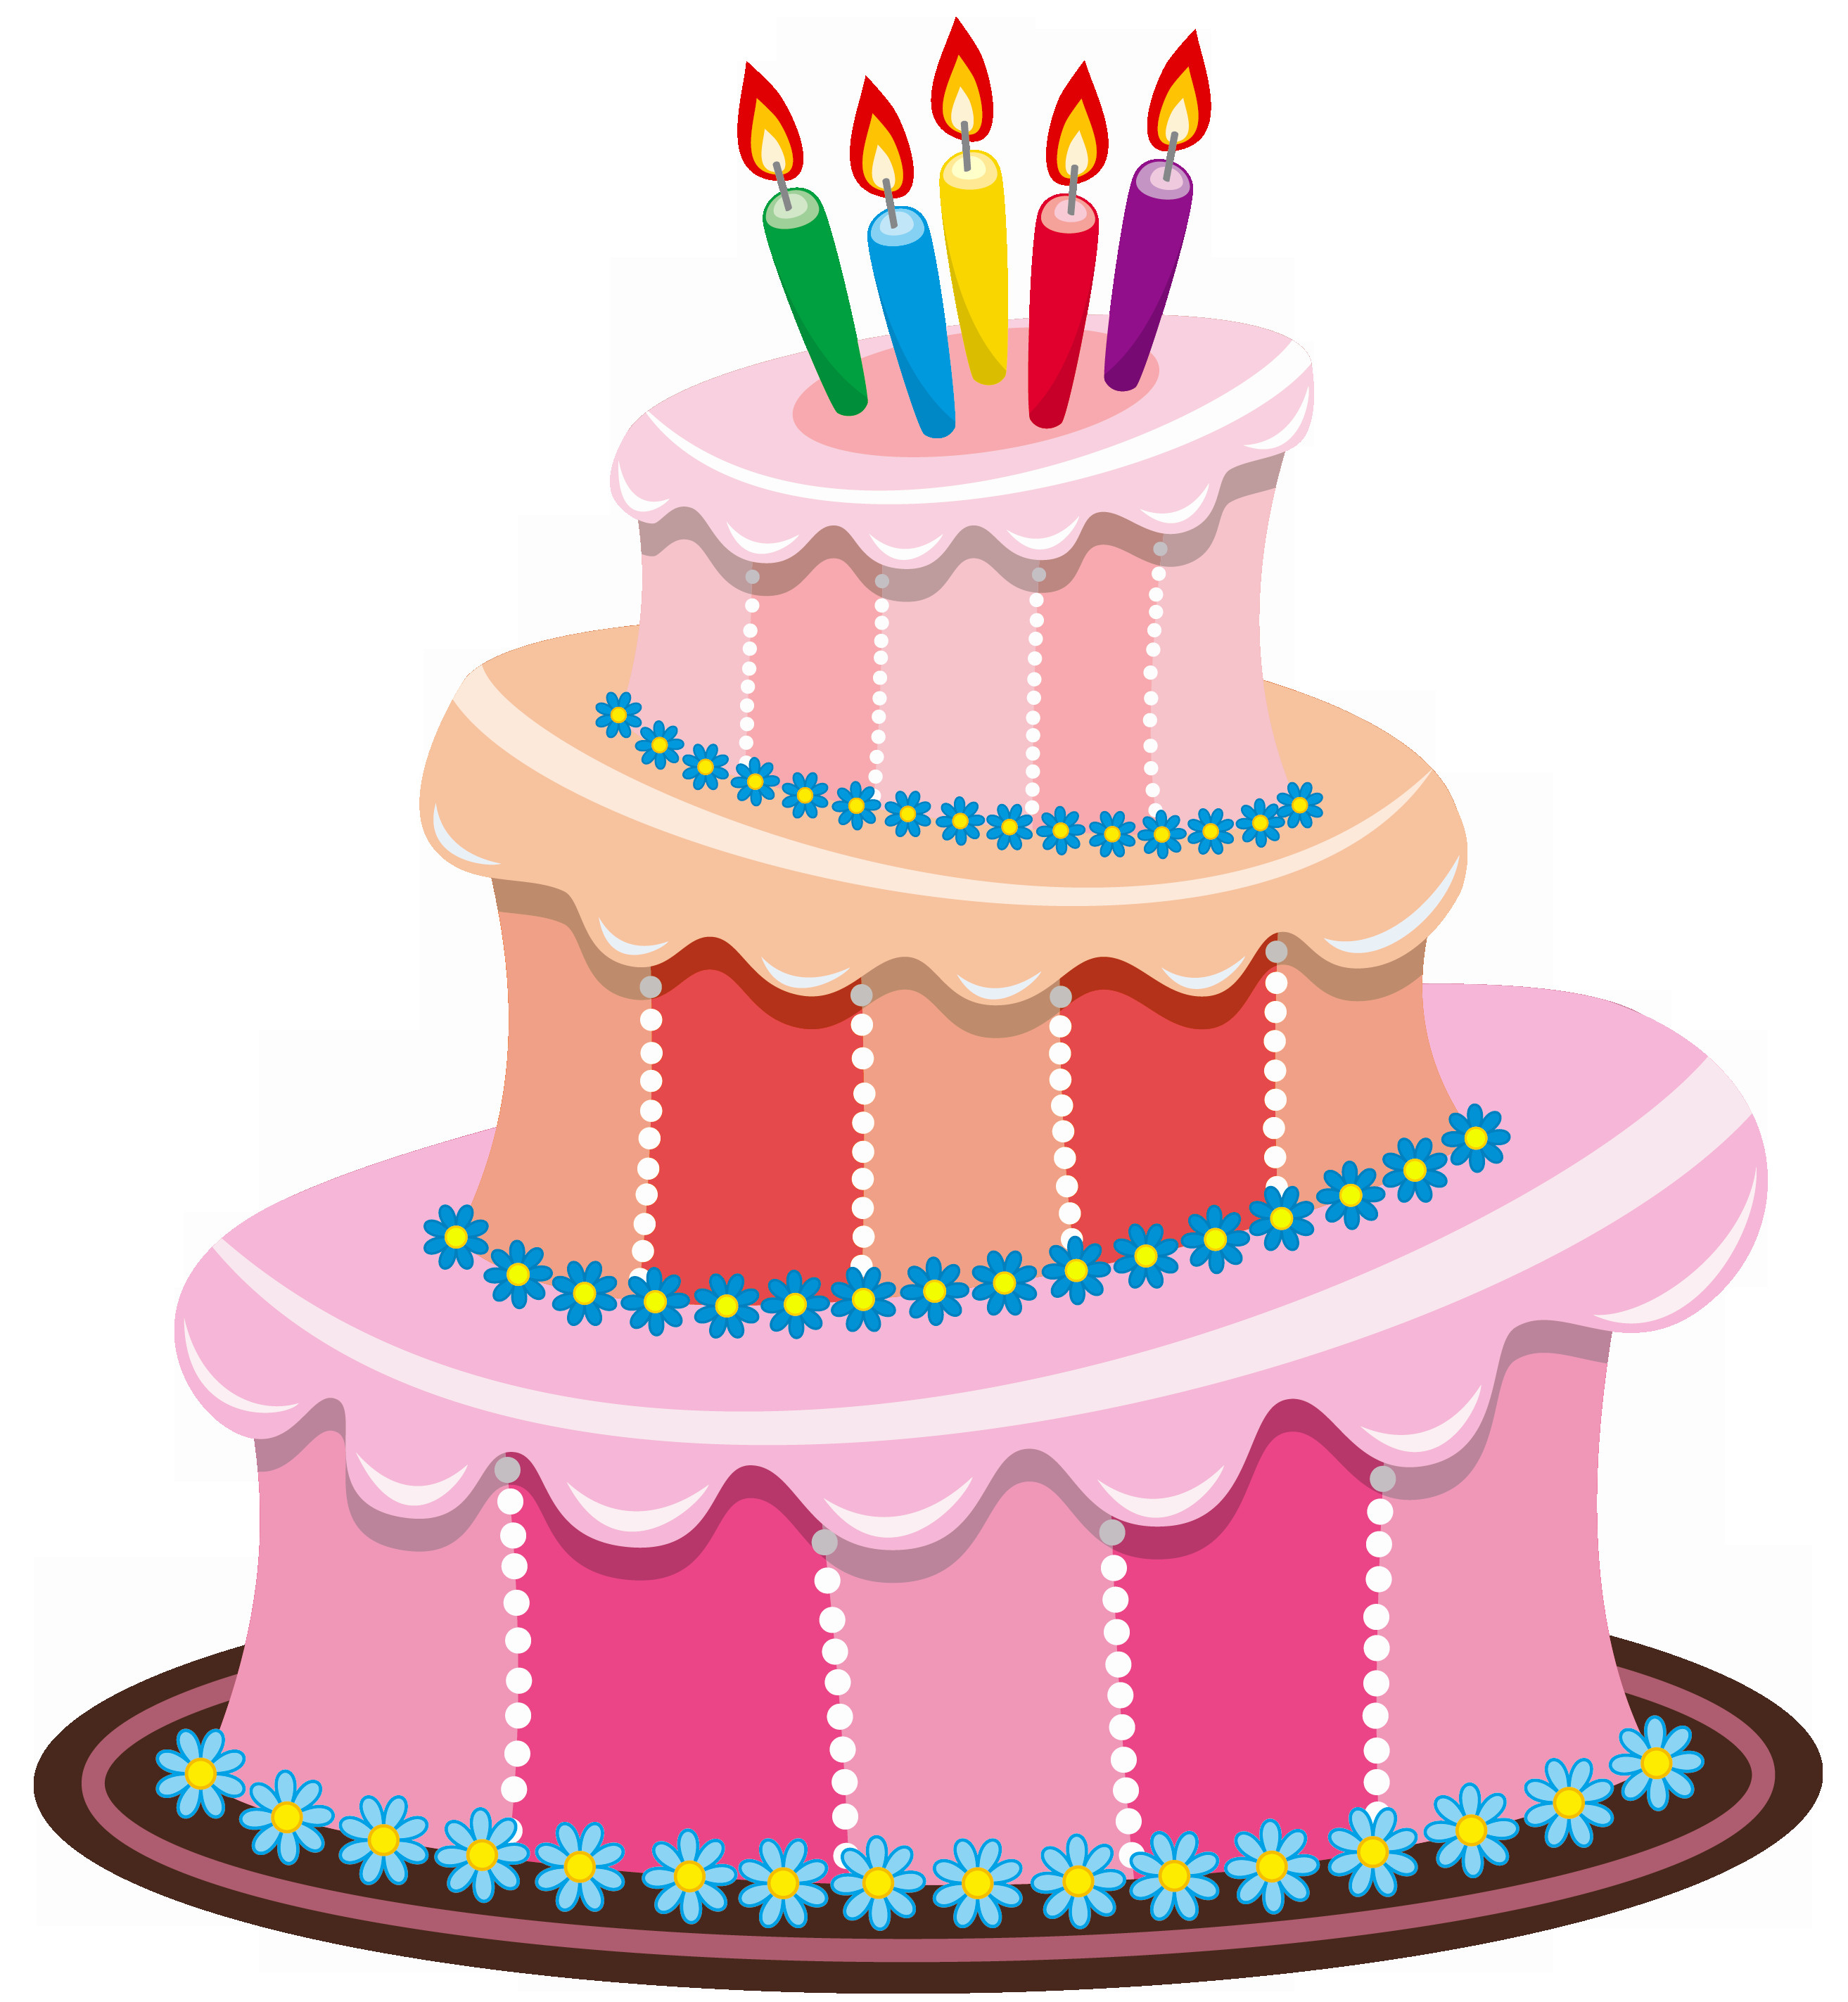 Best ideas about Birthday Cake Clip Art Free
. Save or Pin Birthday Cake Clip Art Free Download Clip Art Now.